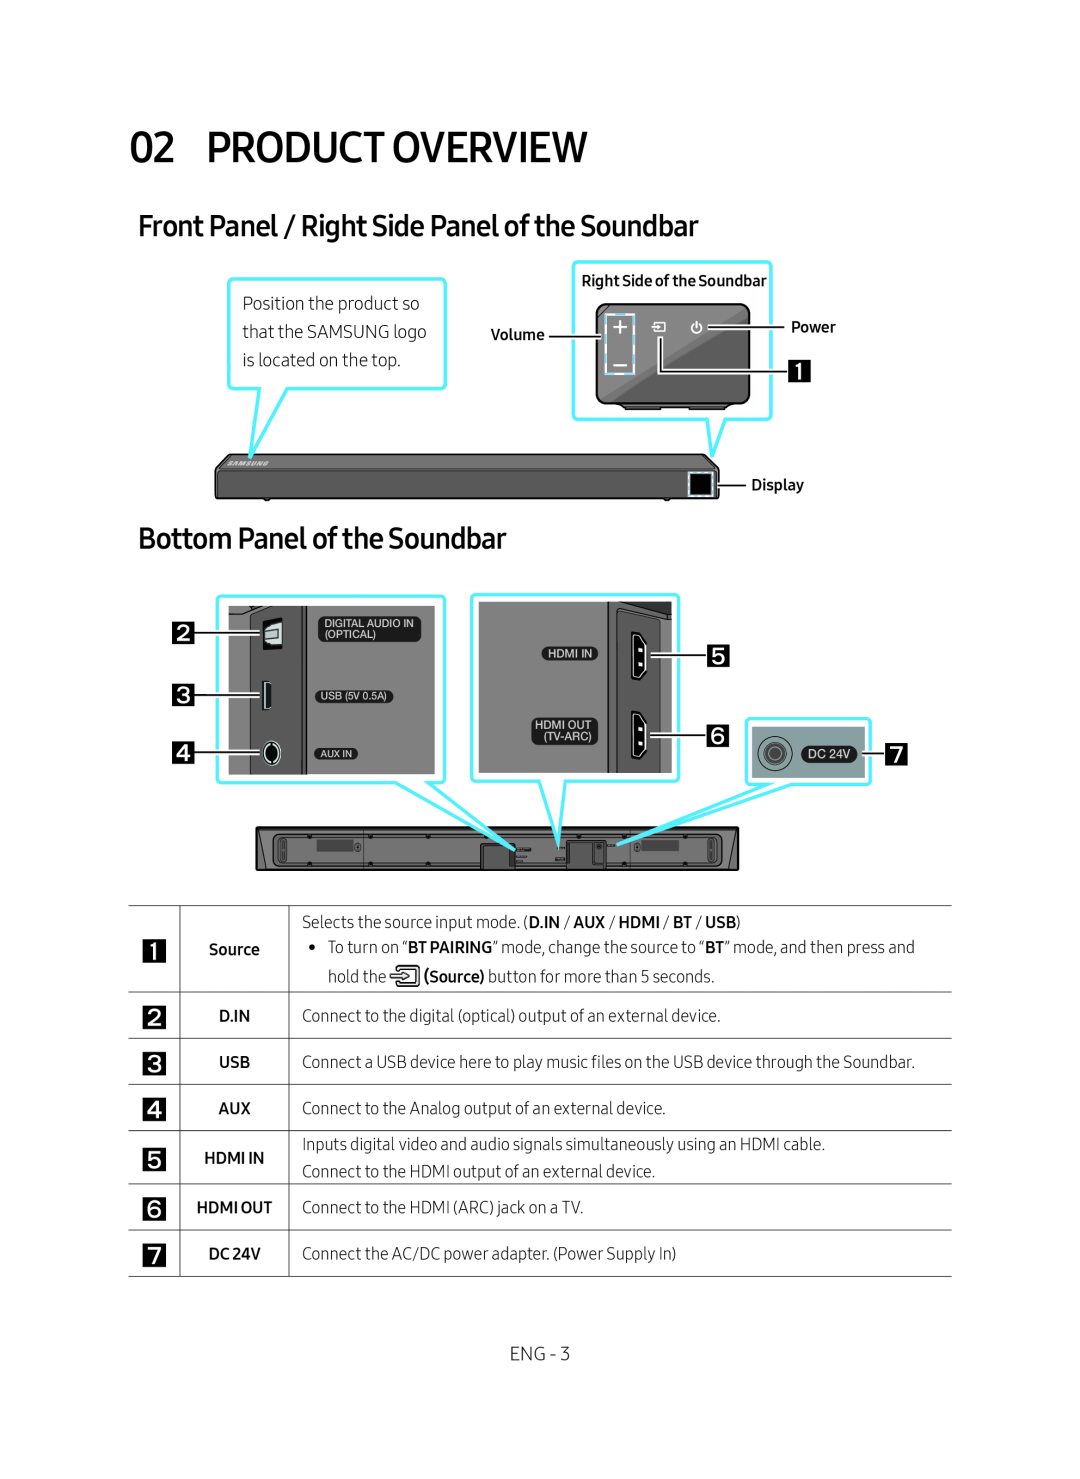 Front Panel / Right Side Panel of the Soundbar Standard HW-R60M